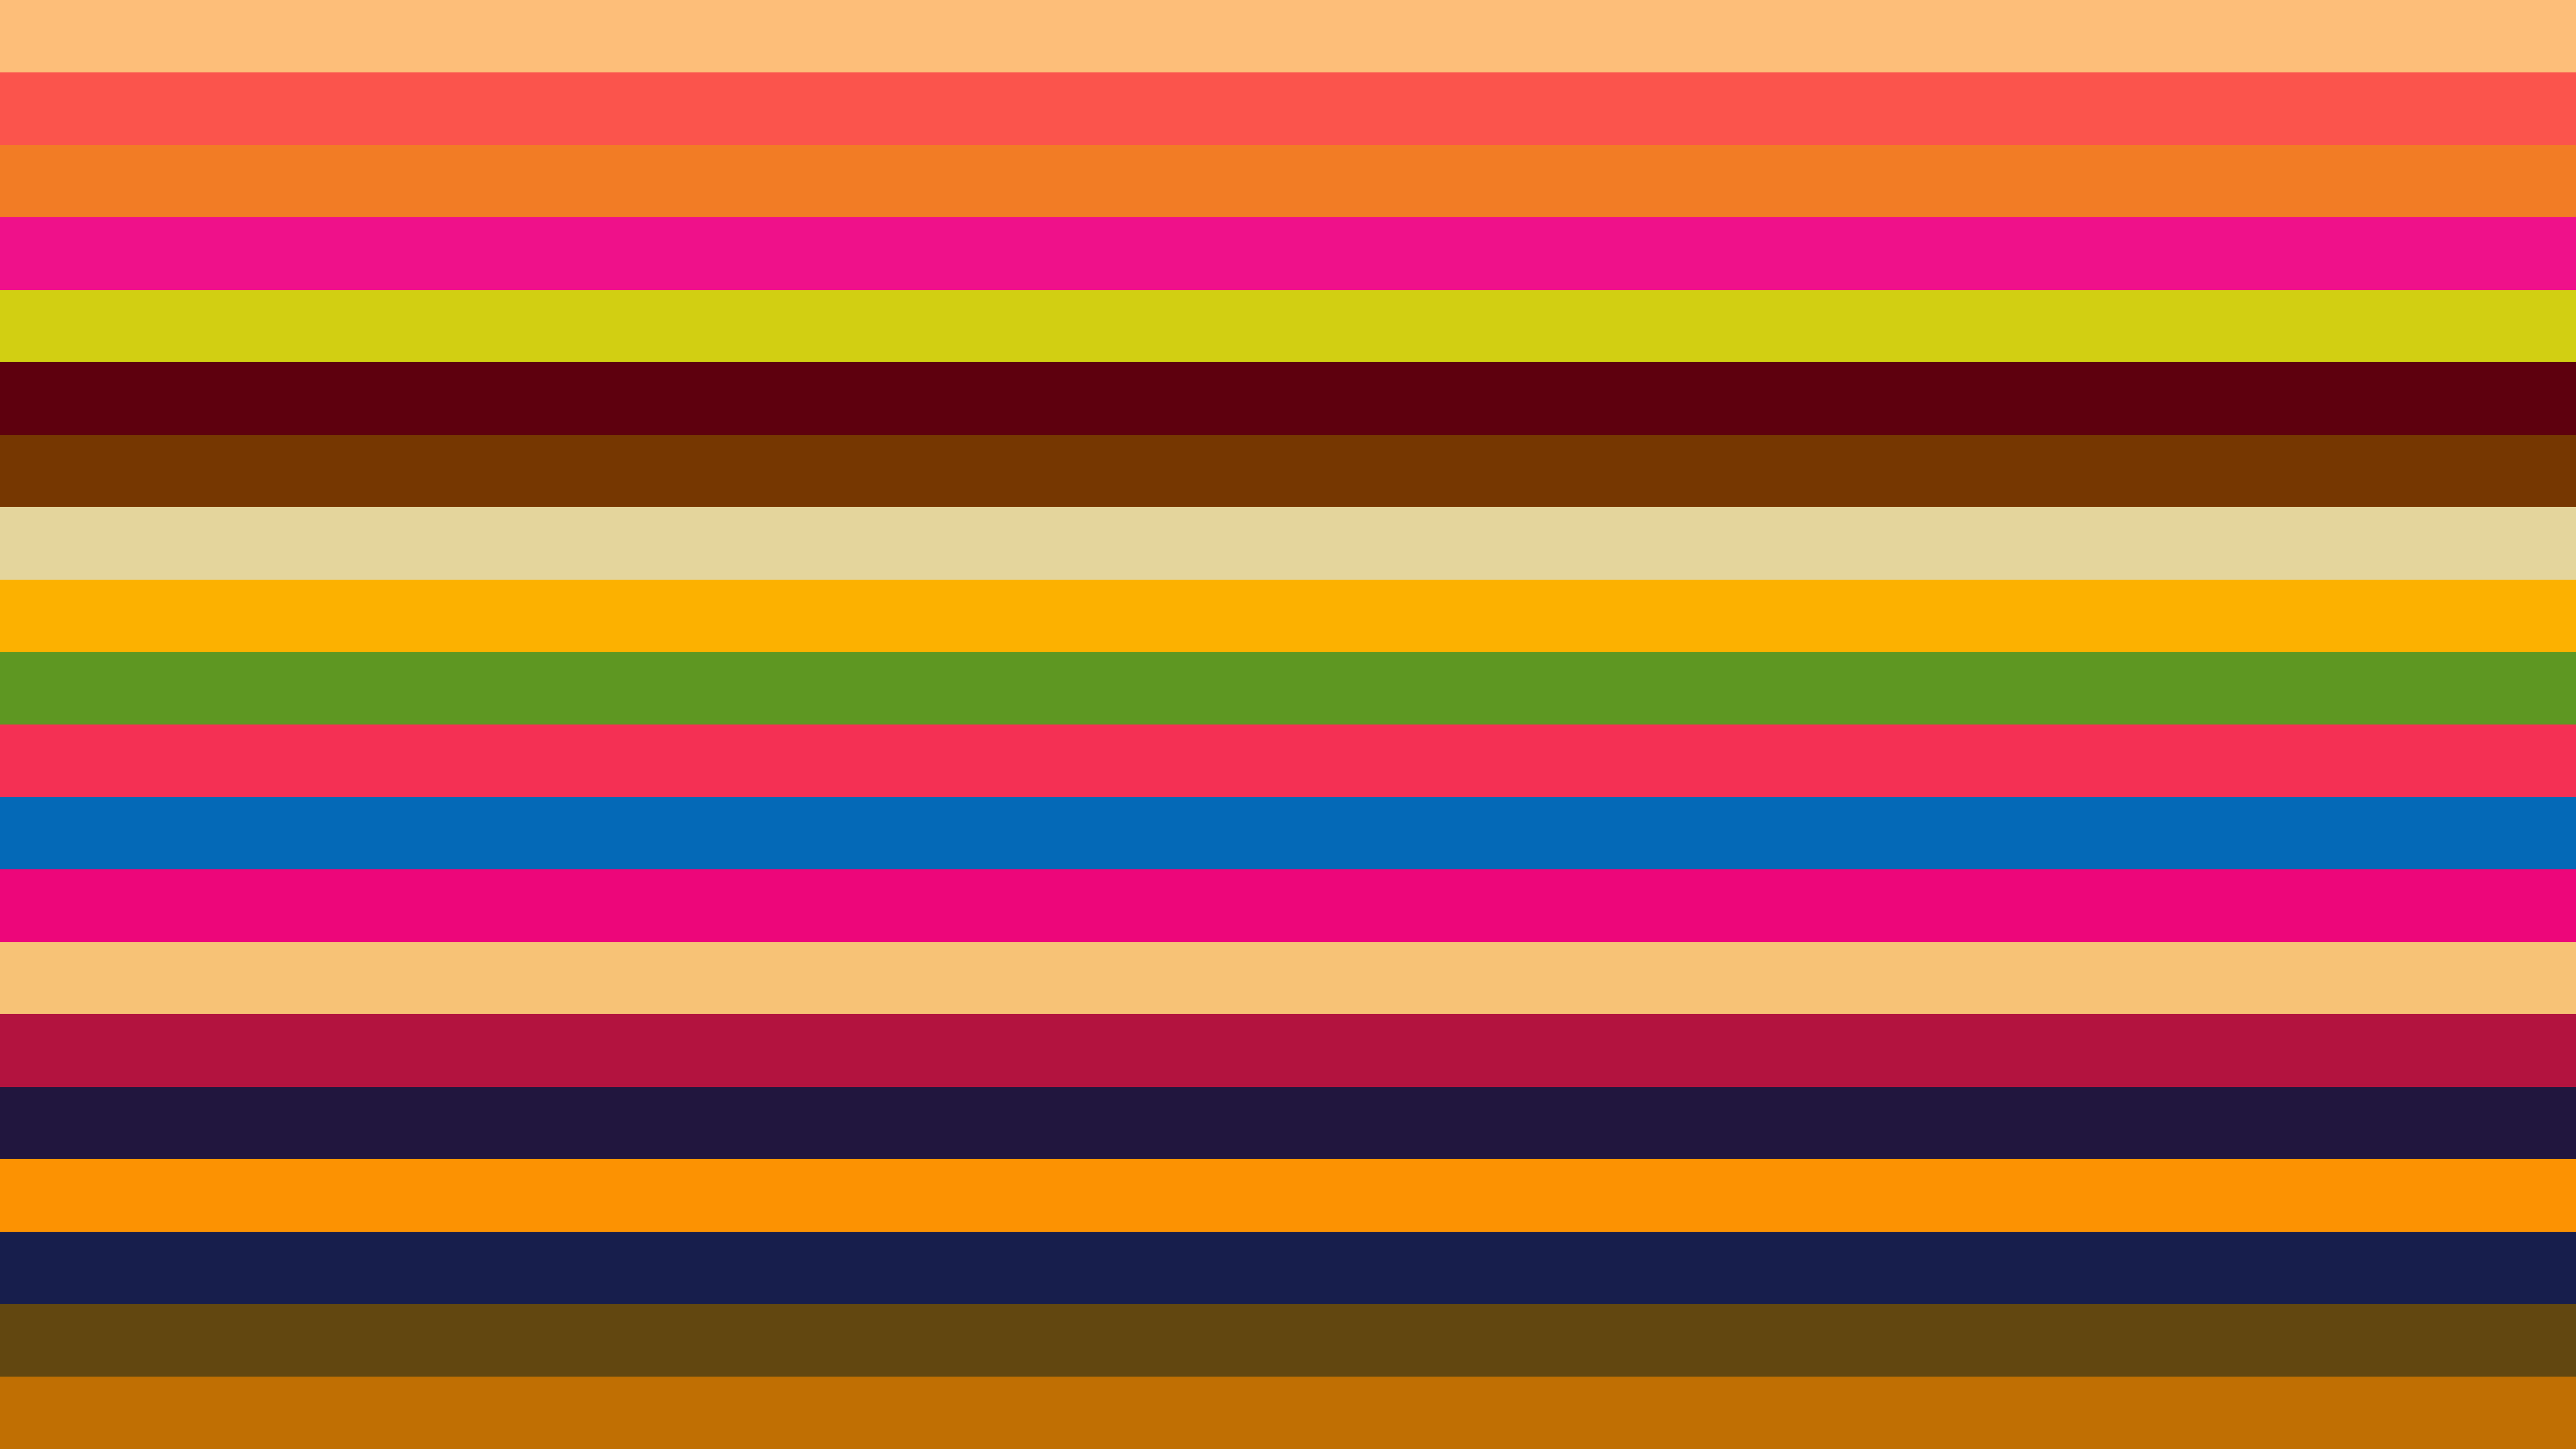 https://files.123freevectors.com/wp-content/original/113775-colorful-horizontal-striped-background-vector.jpg